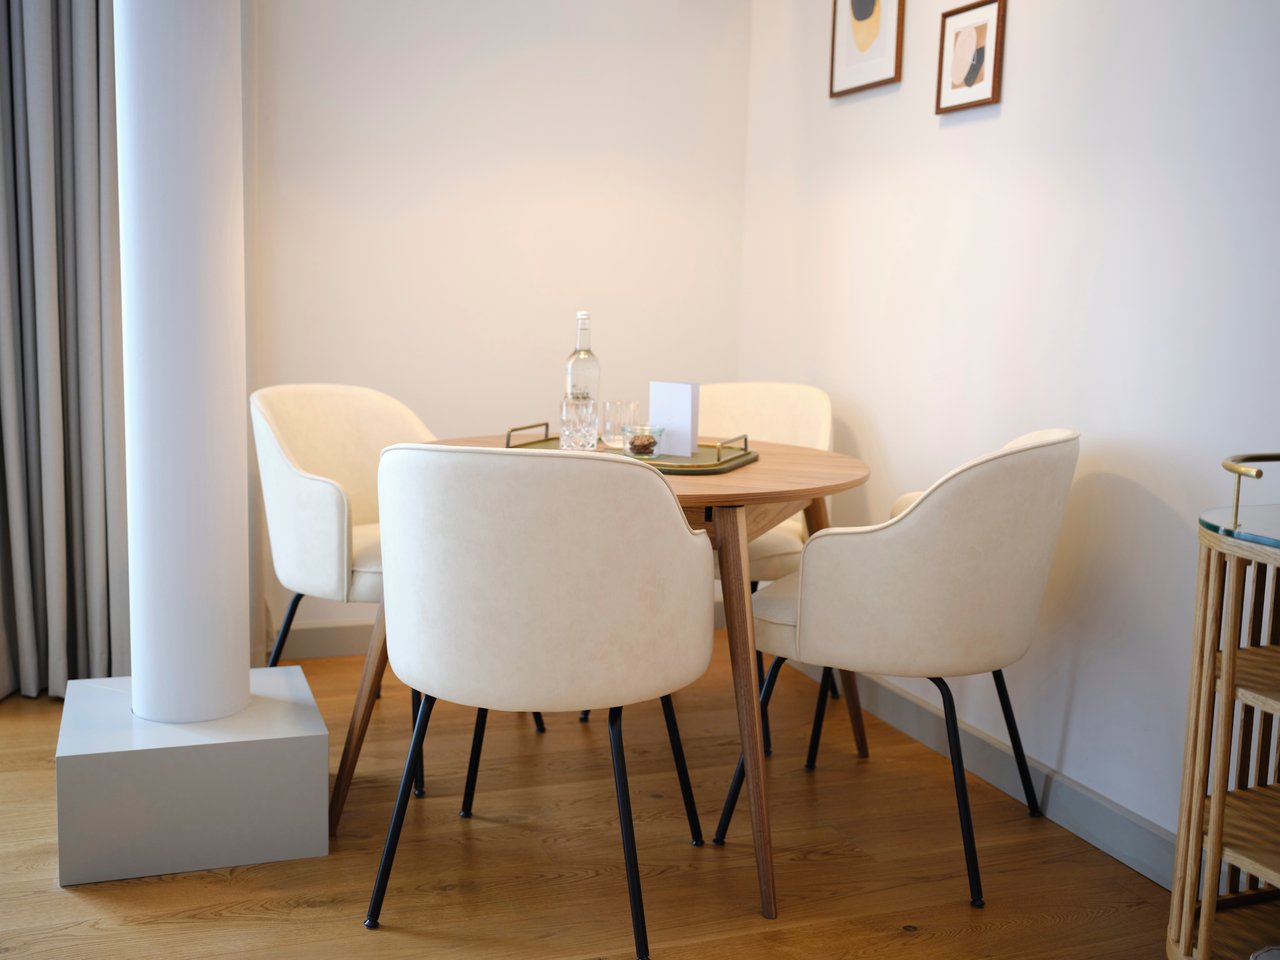 Table in meeting suite